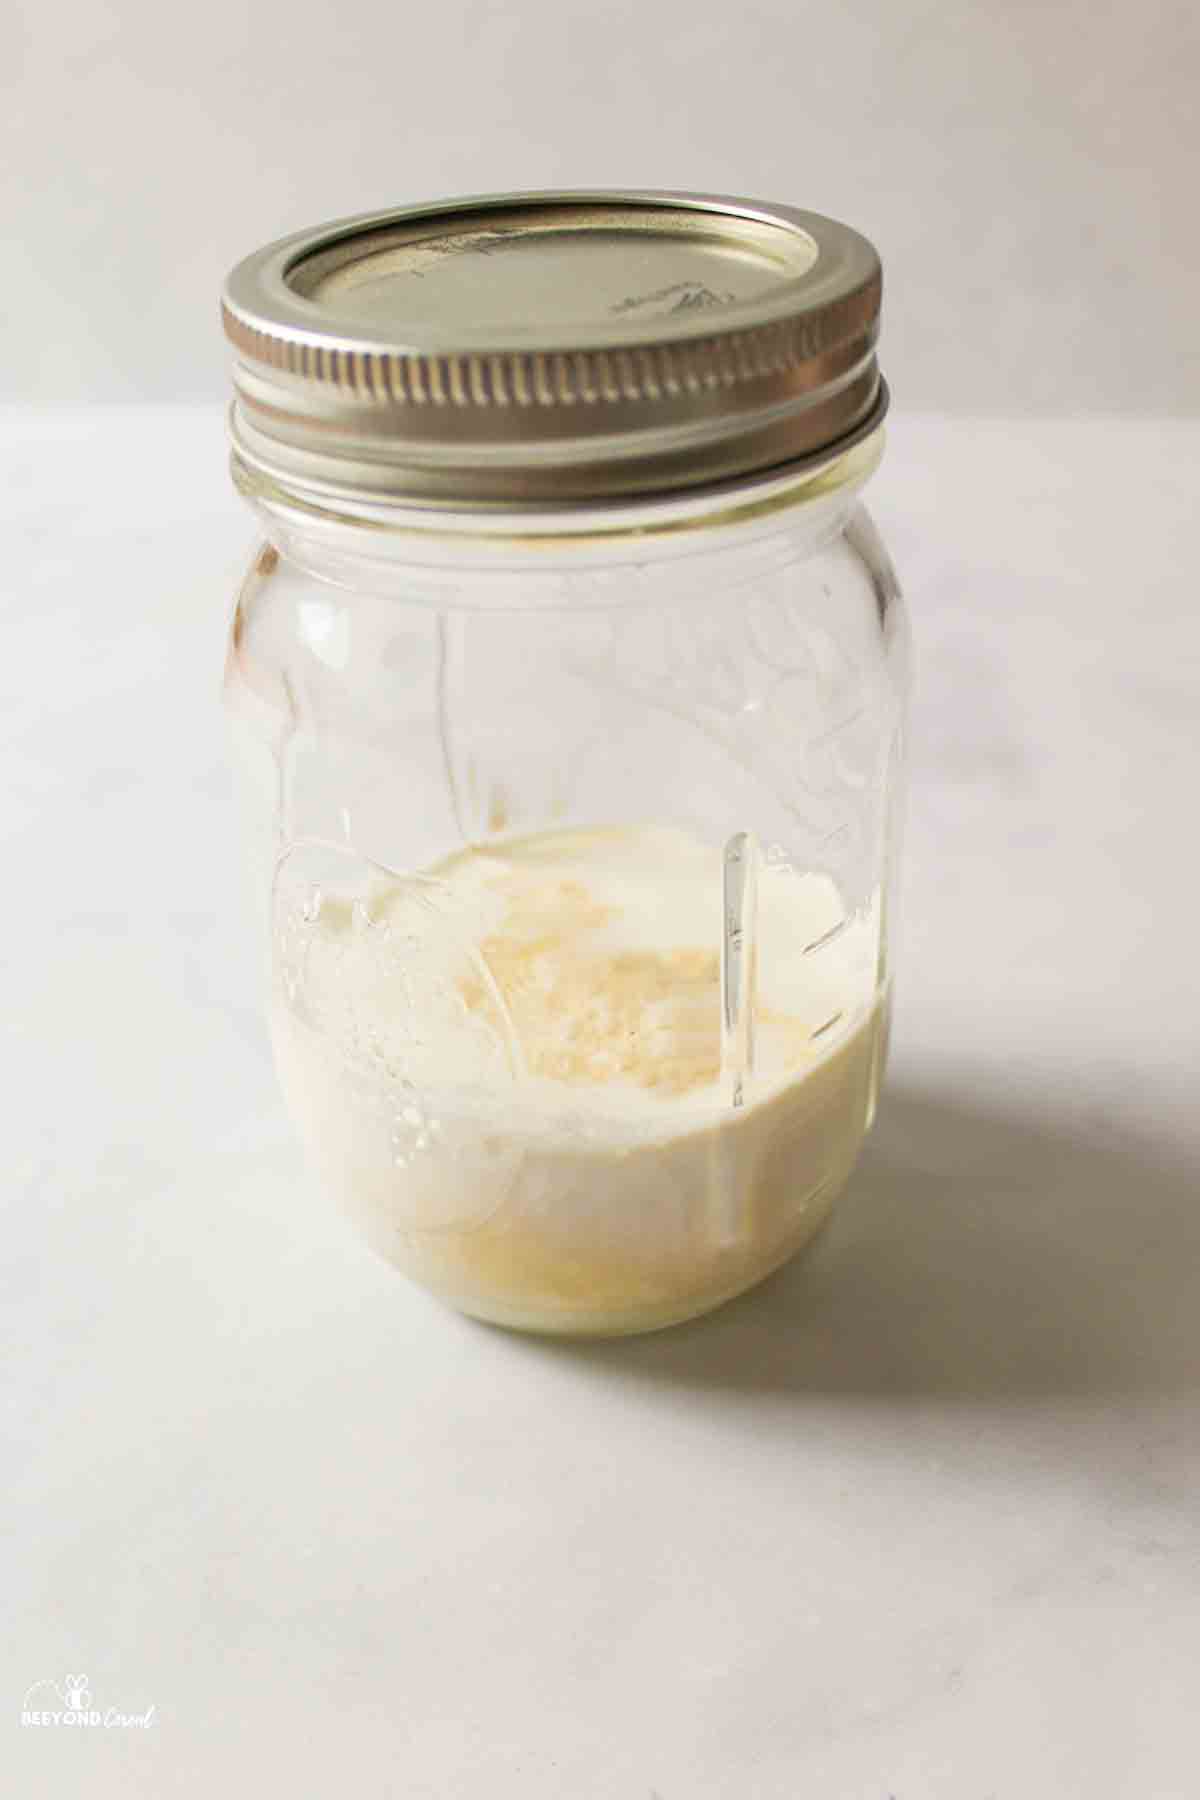 vanilla ice cream ingredients in a sealed mason jar